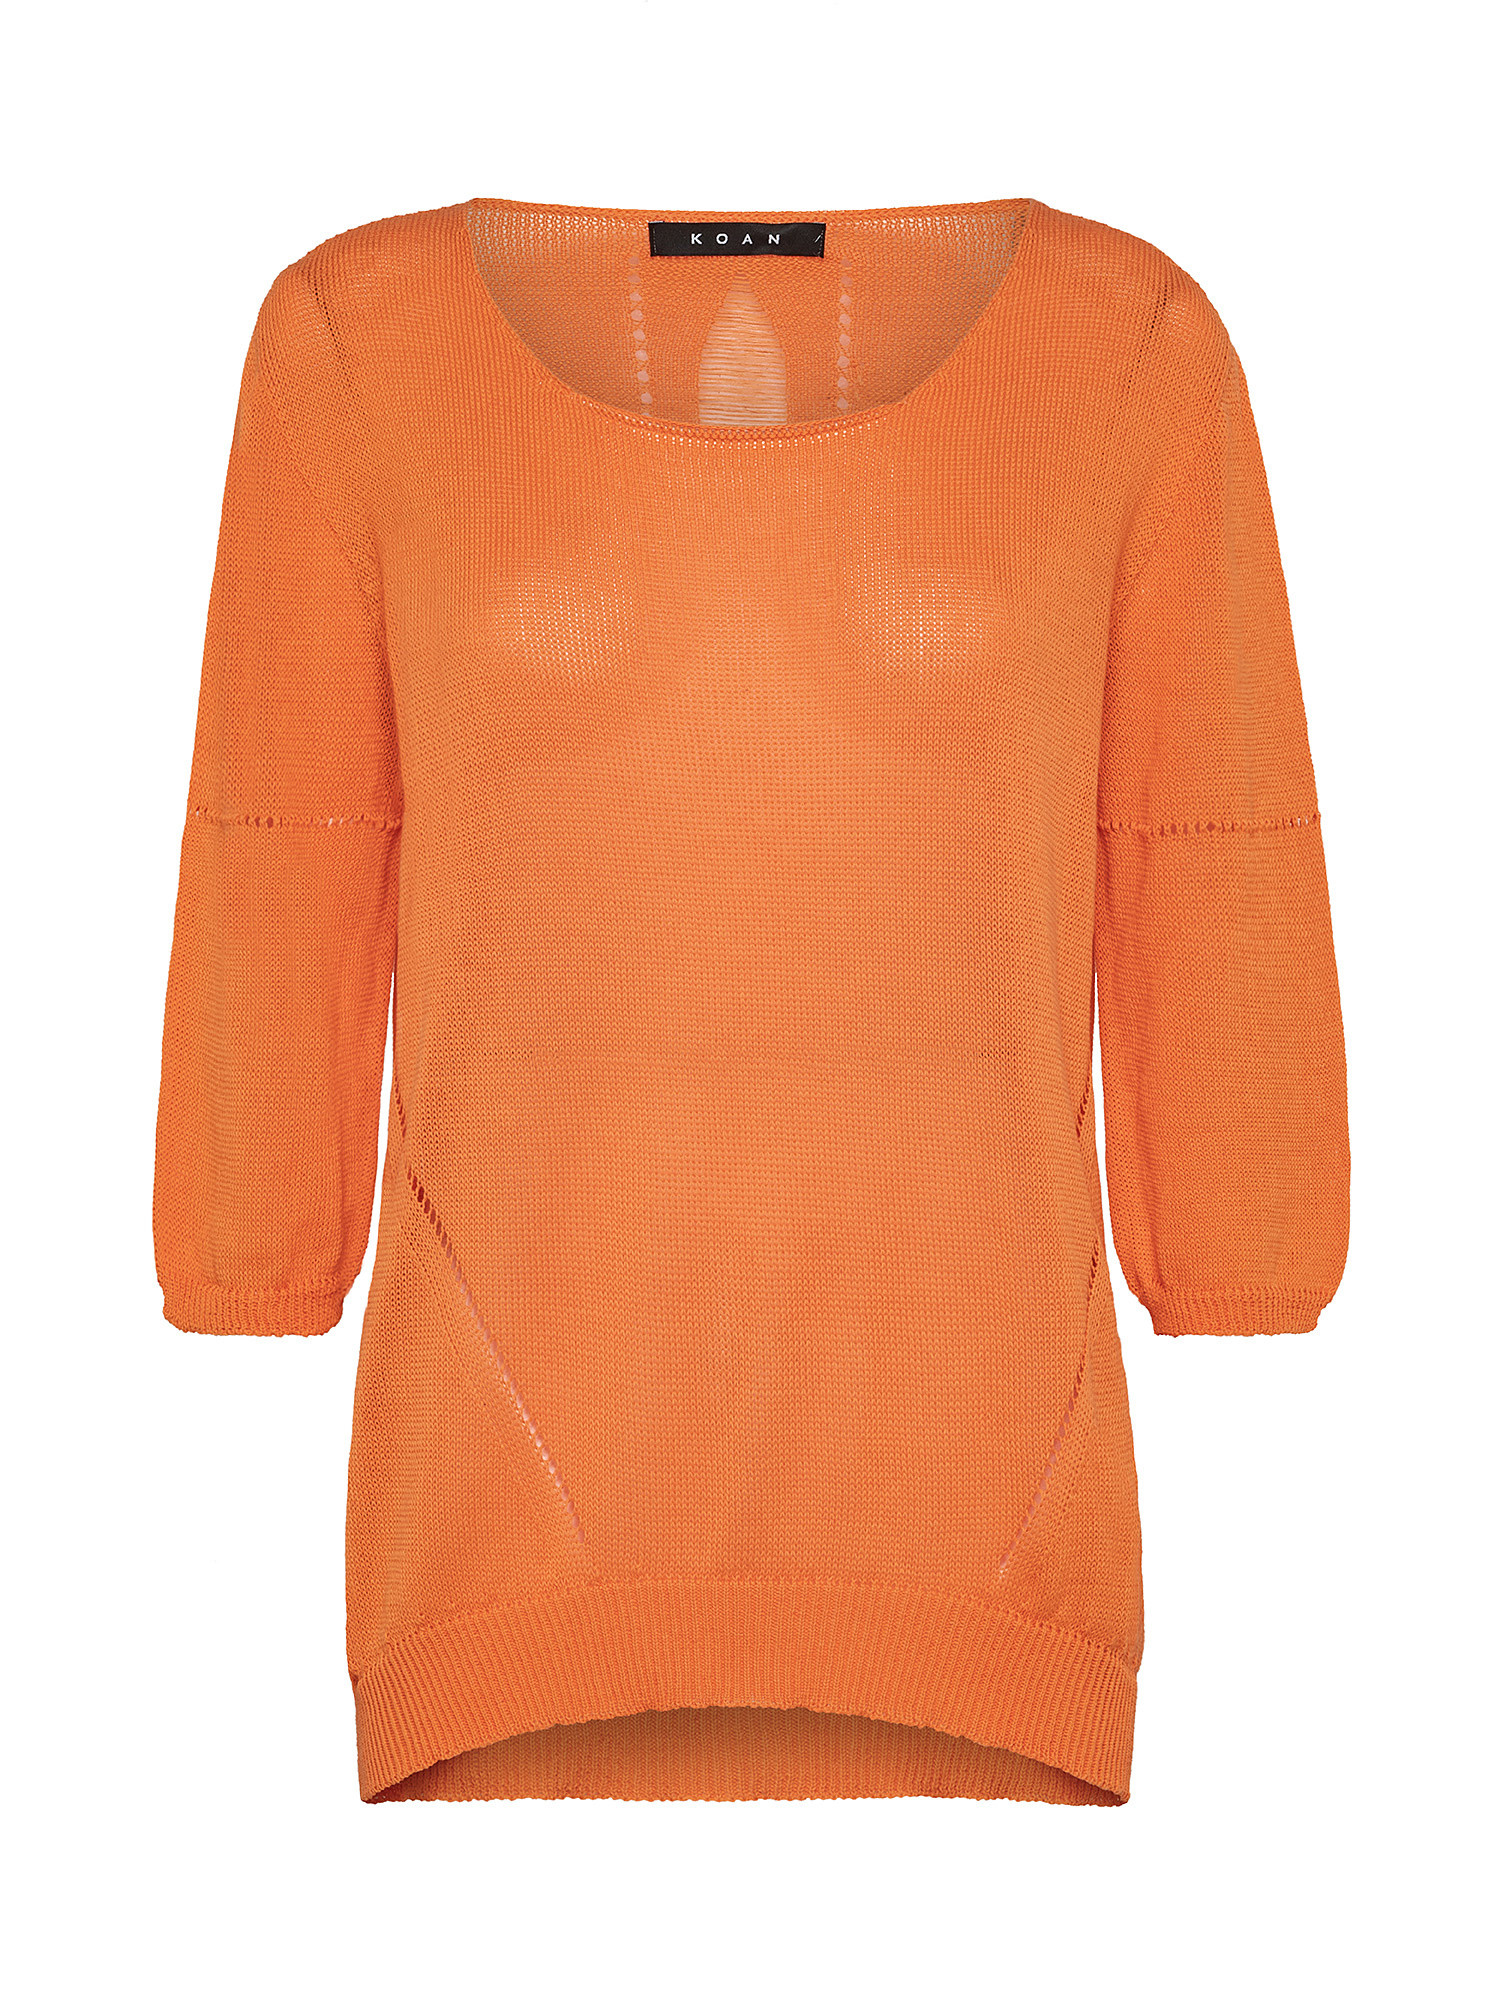 Tricot sweater, Orange, large image number 0